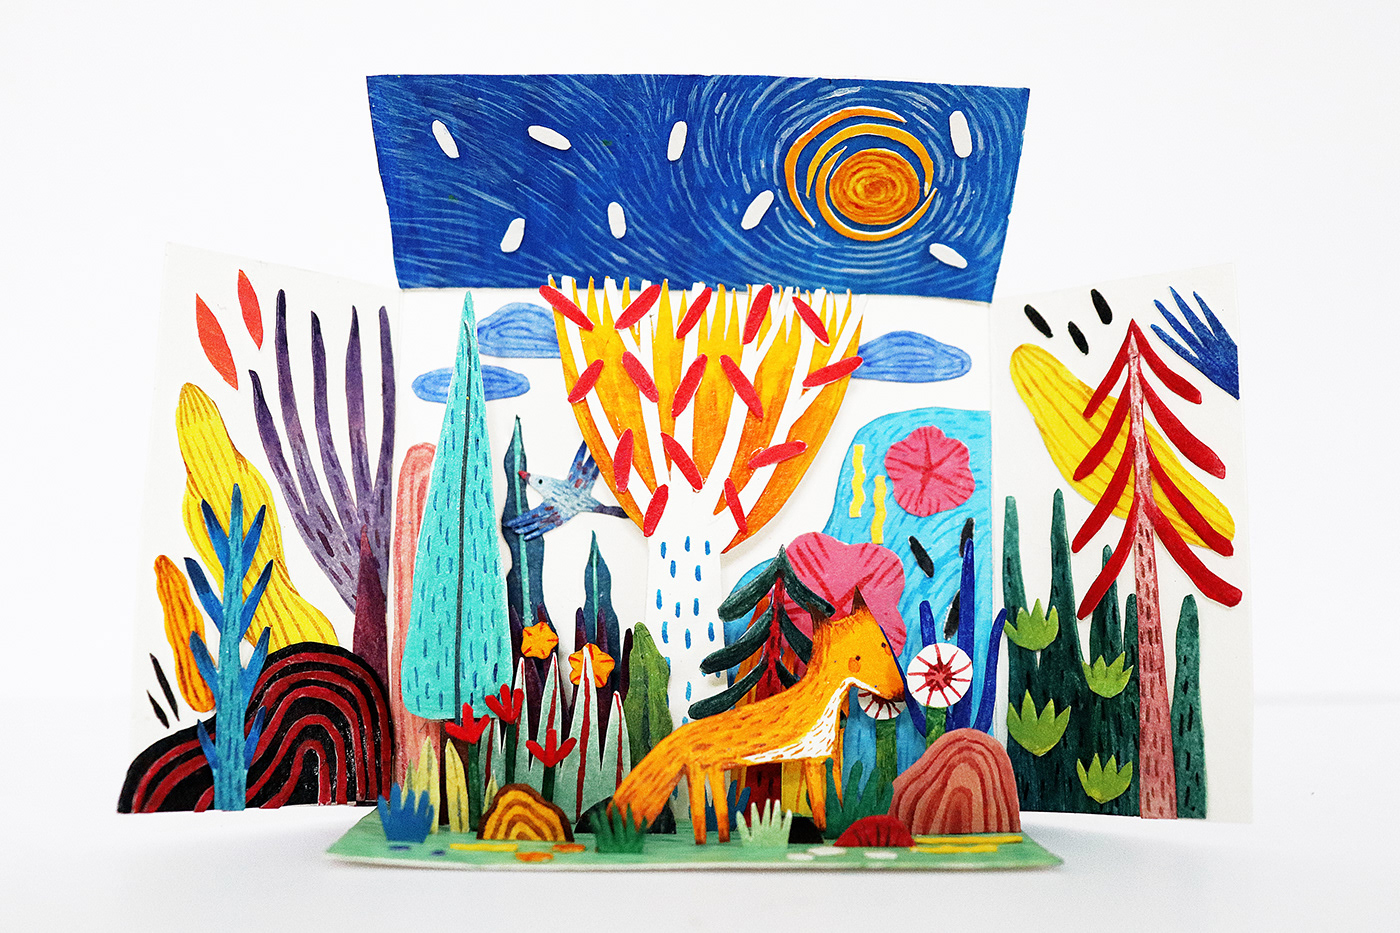 acrylic artcraft craft figures paperart toy wood